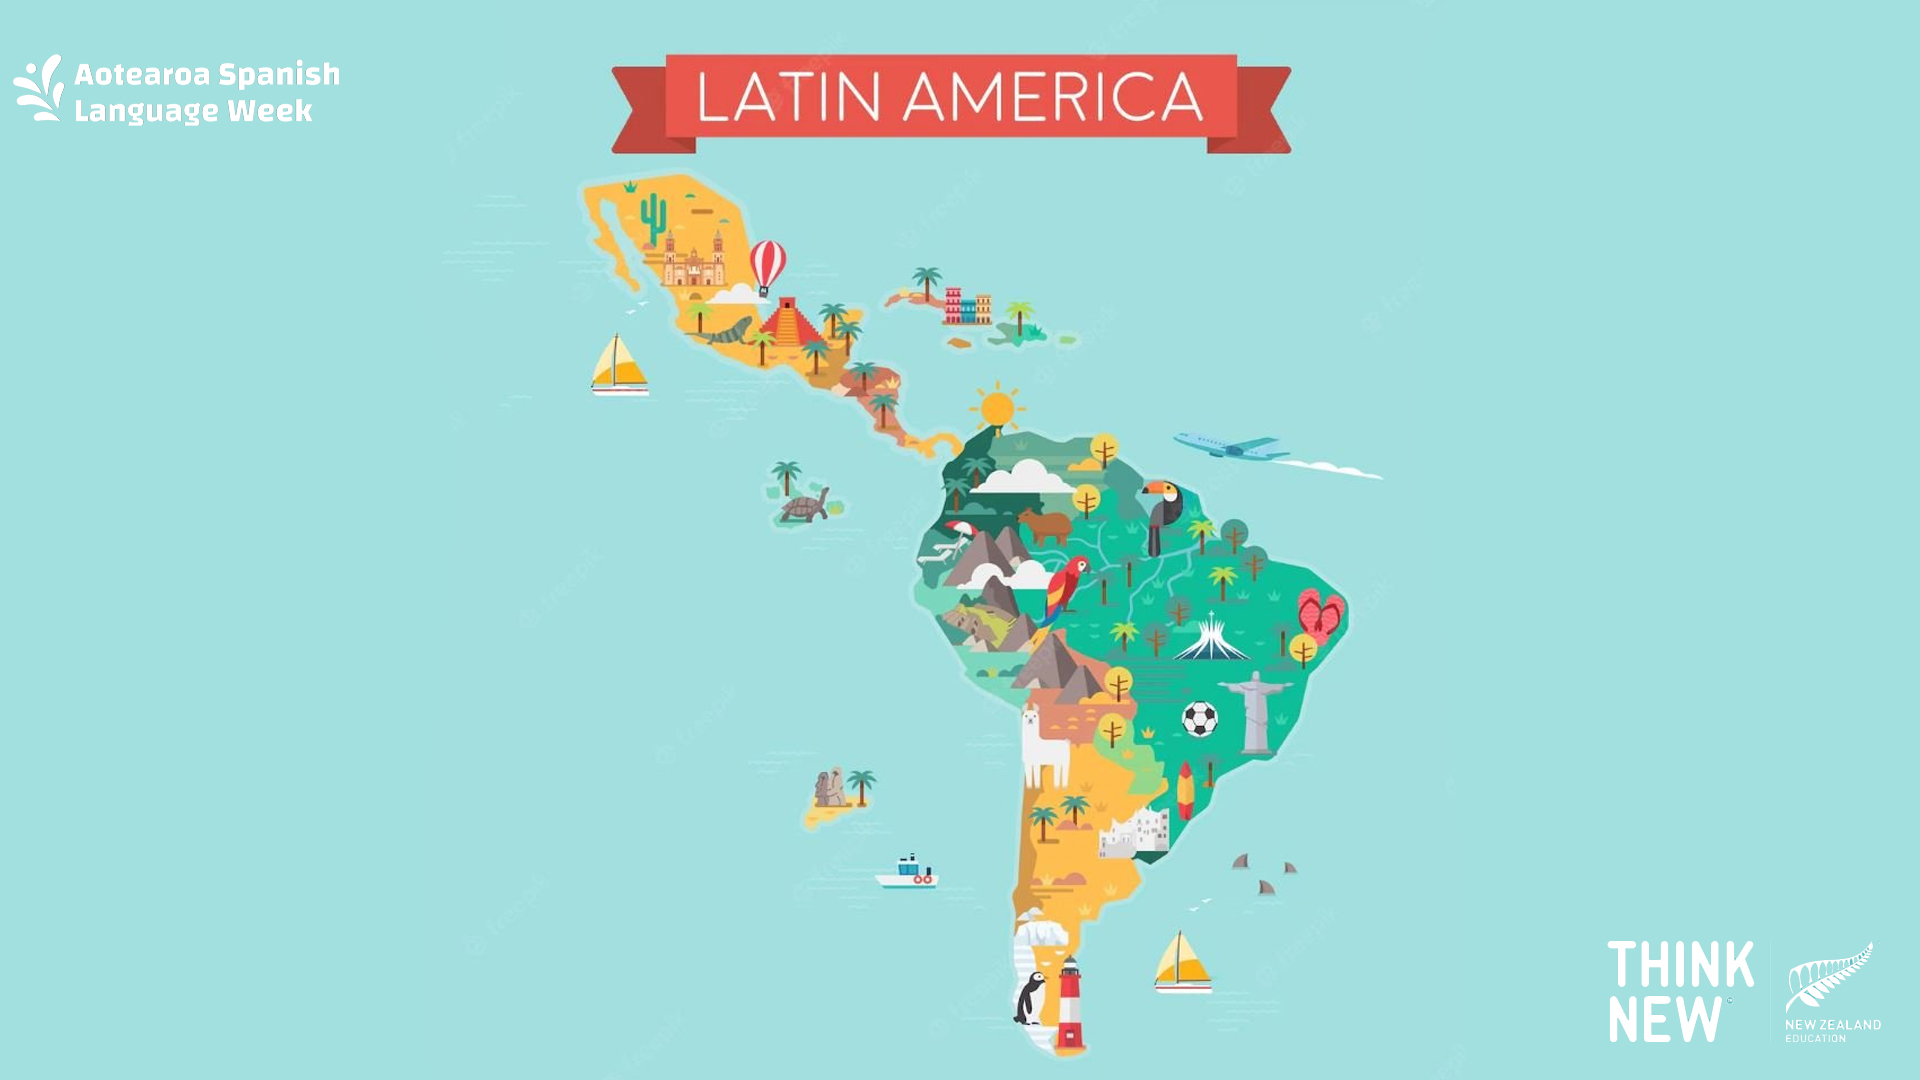 An image of a cartoon map of Latin America